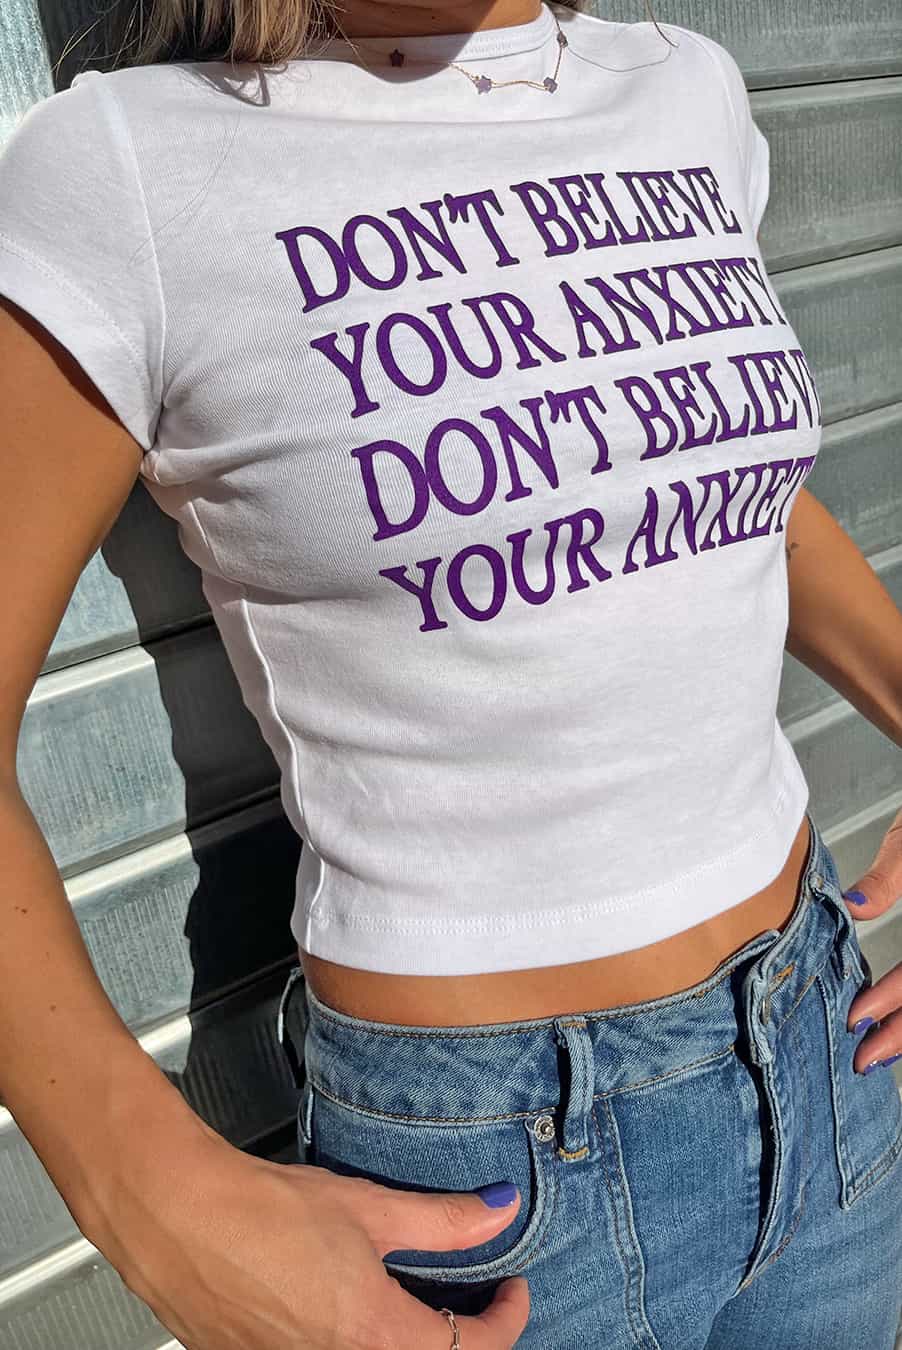 T-shirt Don't believe